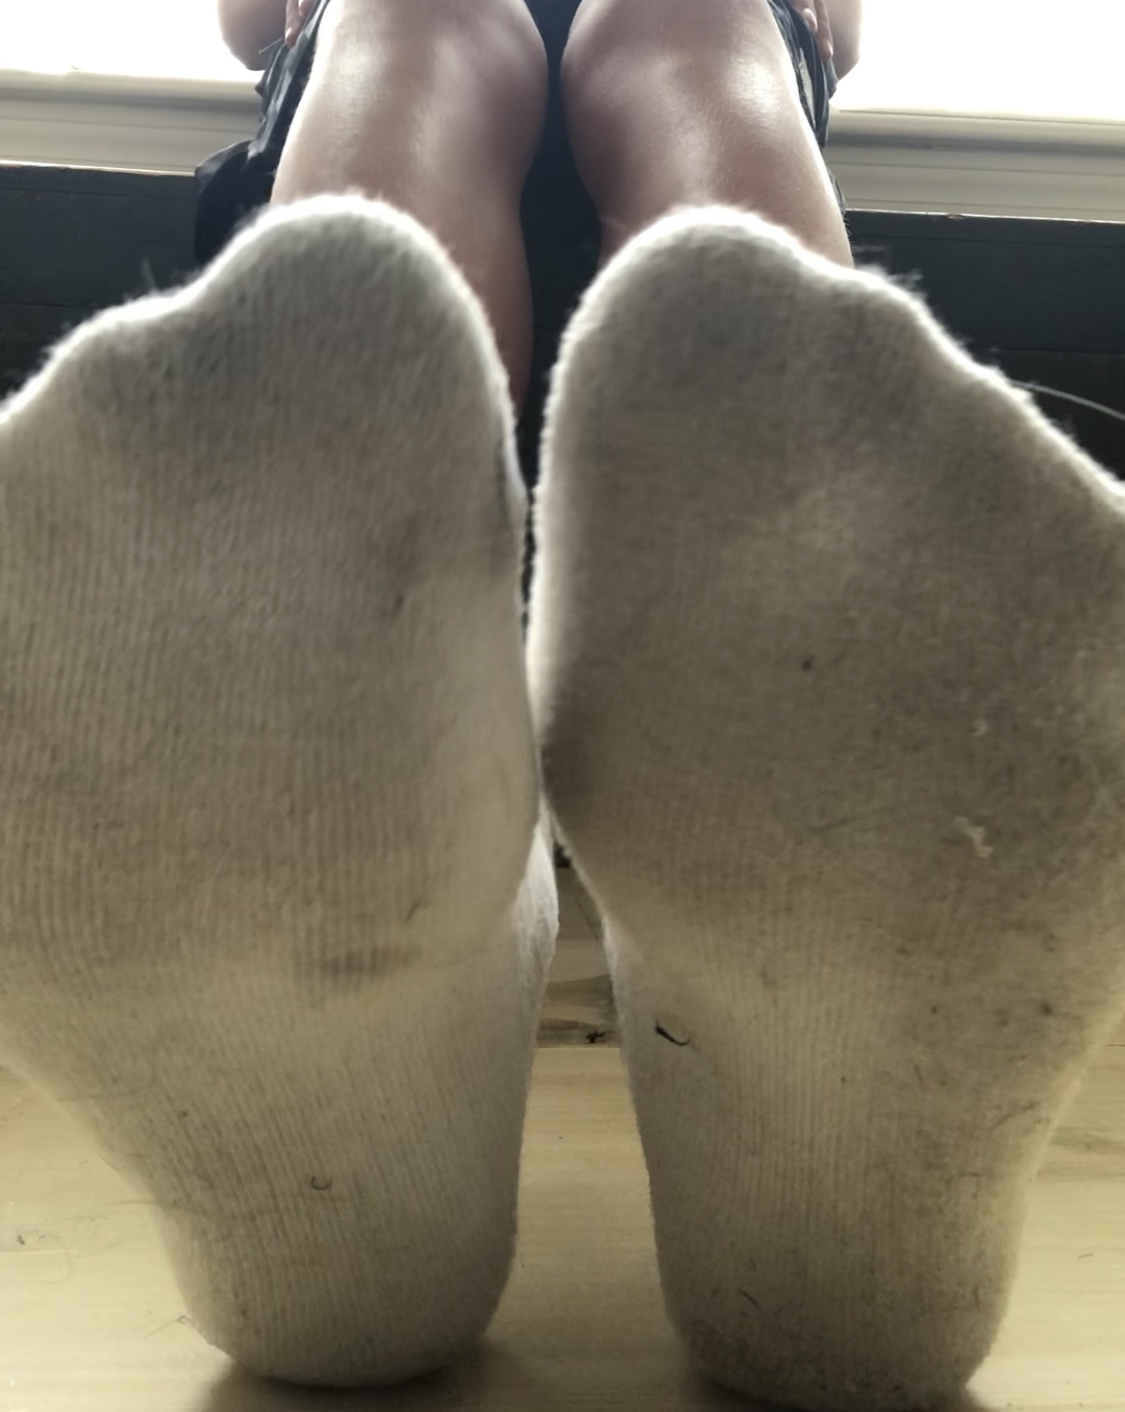 Hot dirty socks and feet